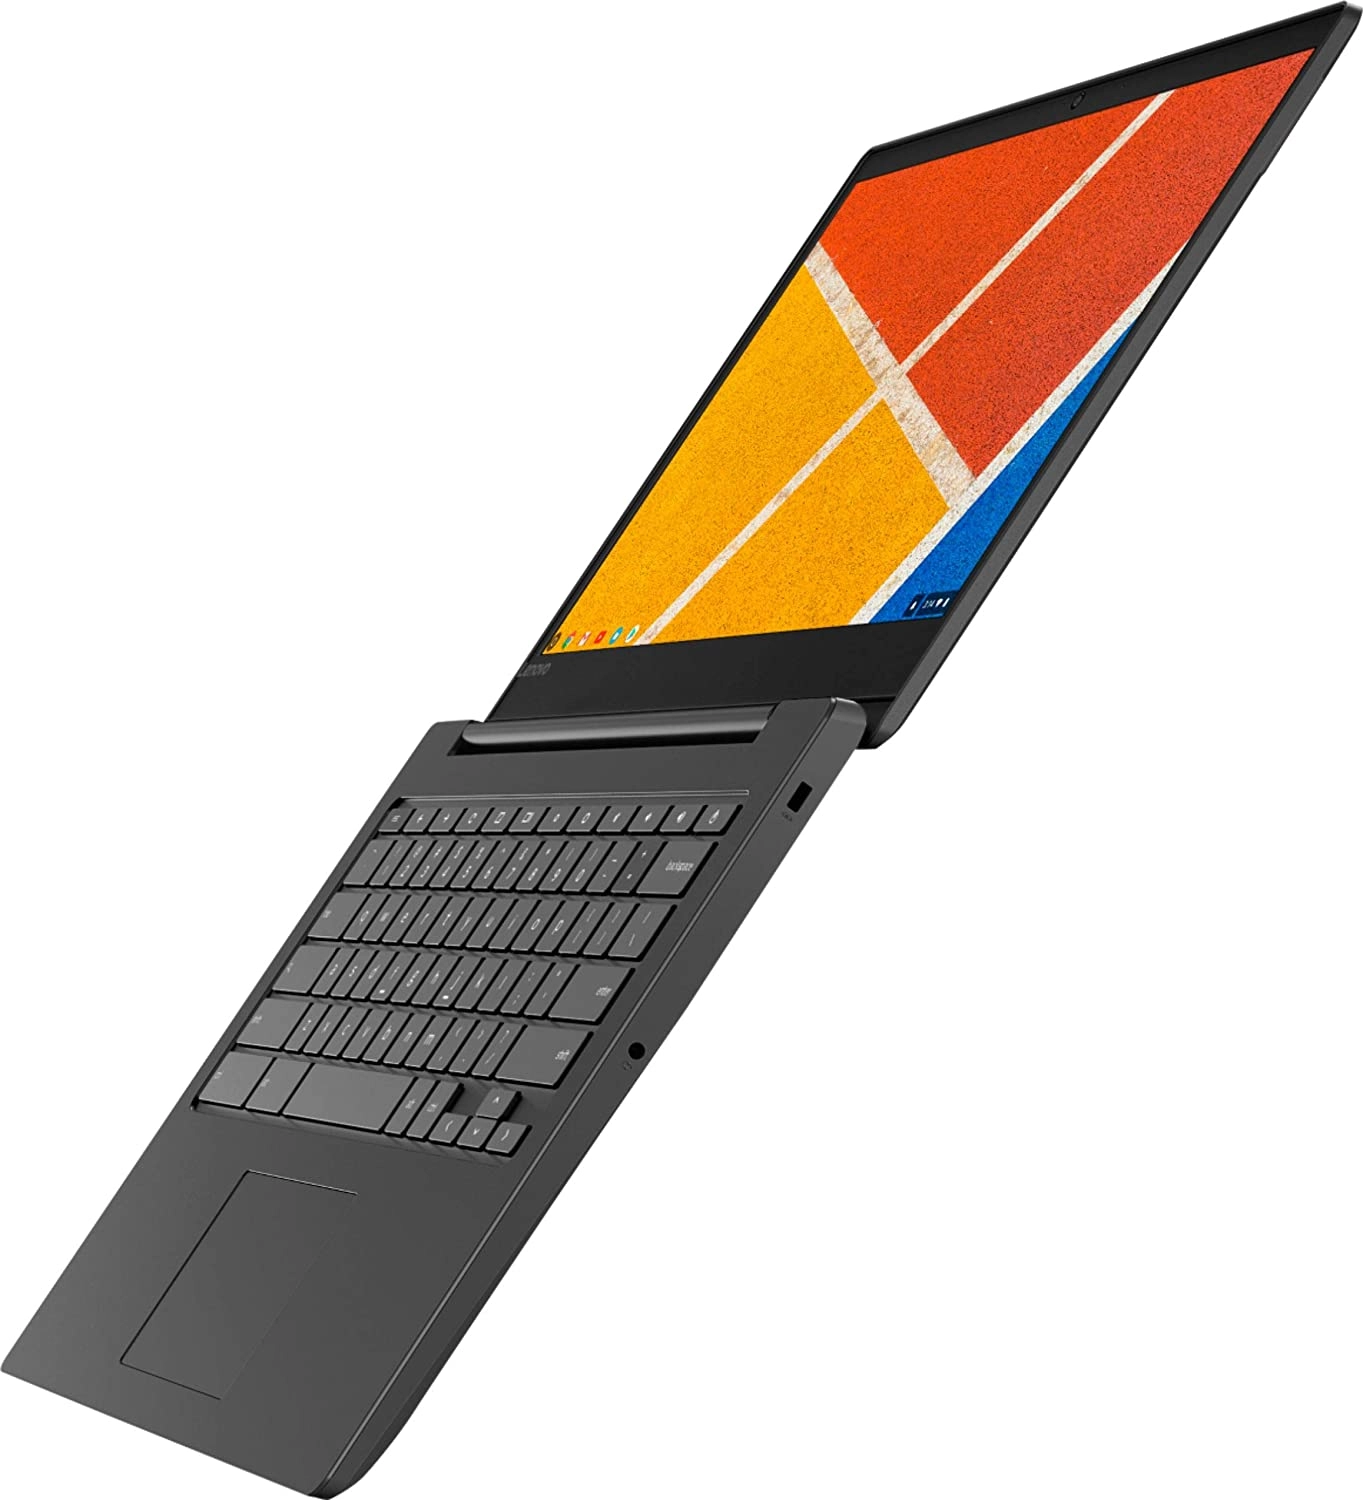 Lenovo Premium Chromebook 3 laptop image